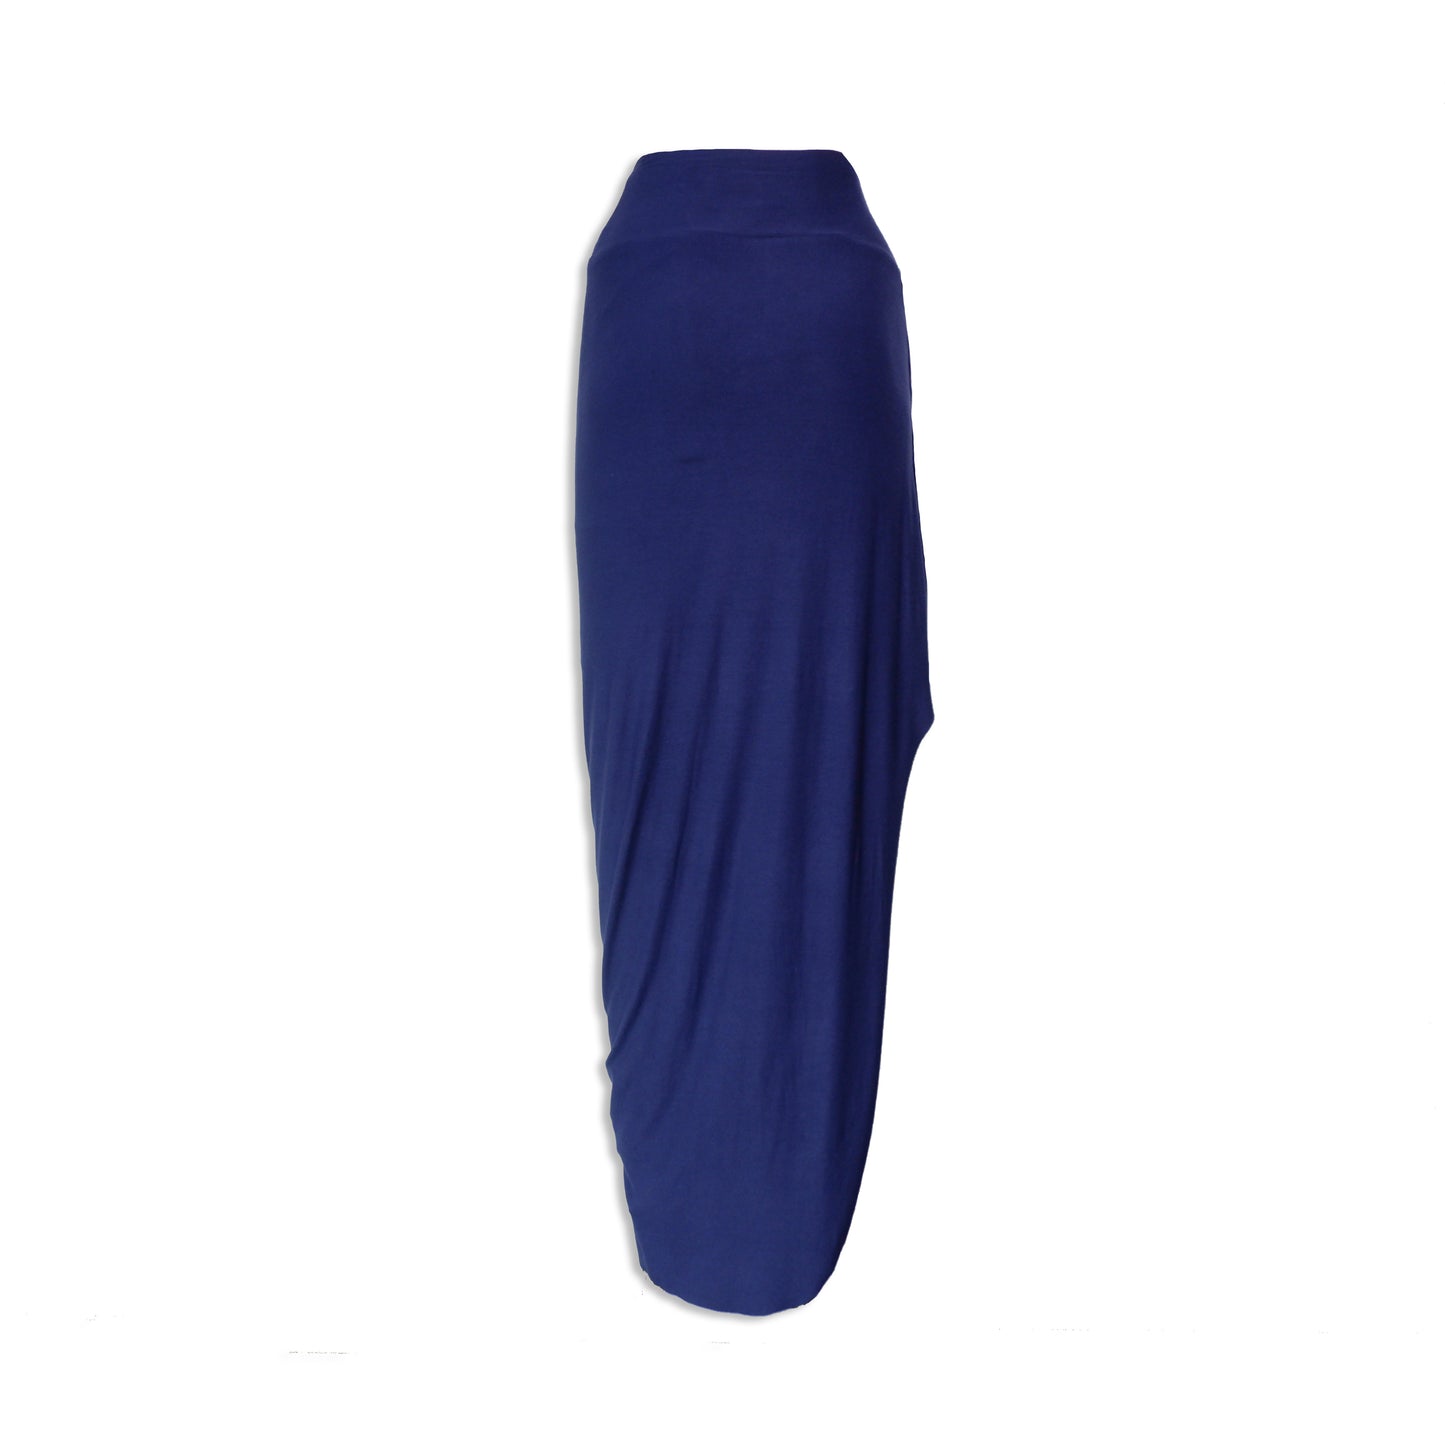 Navy Blue Modal Soft Jersey Draped Skirt